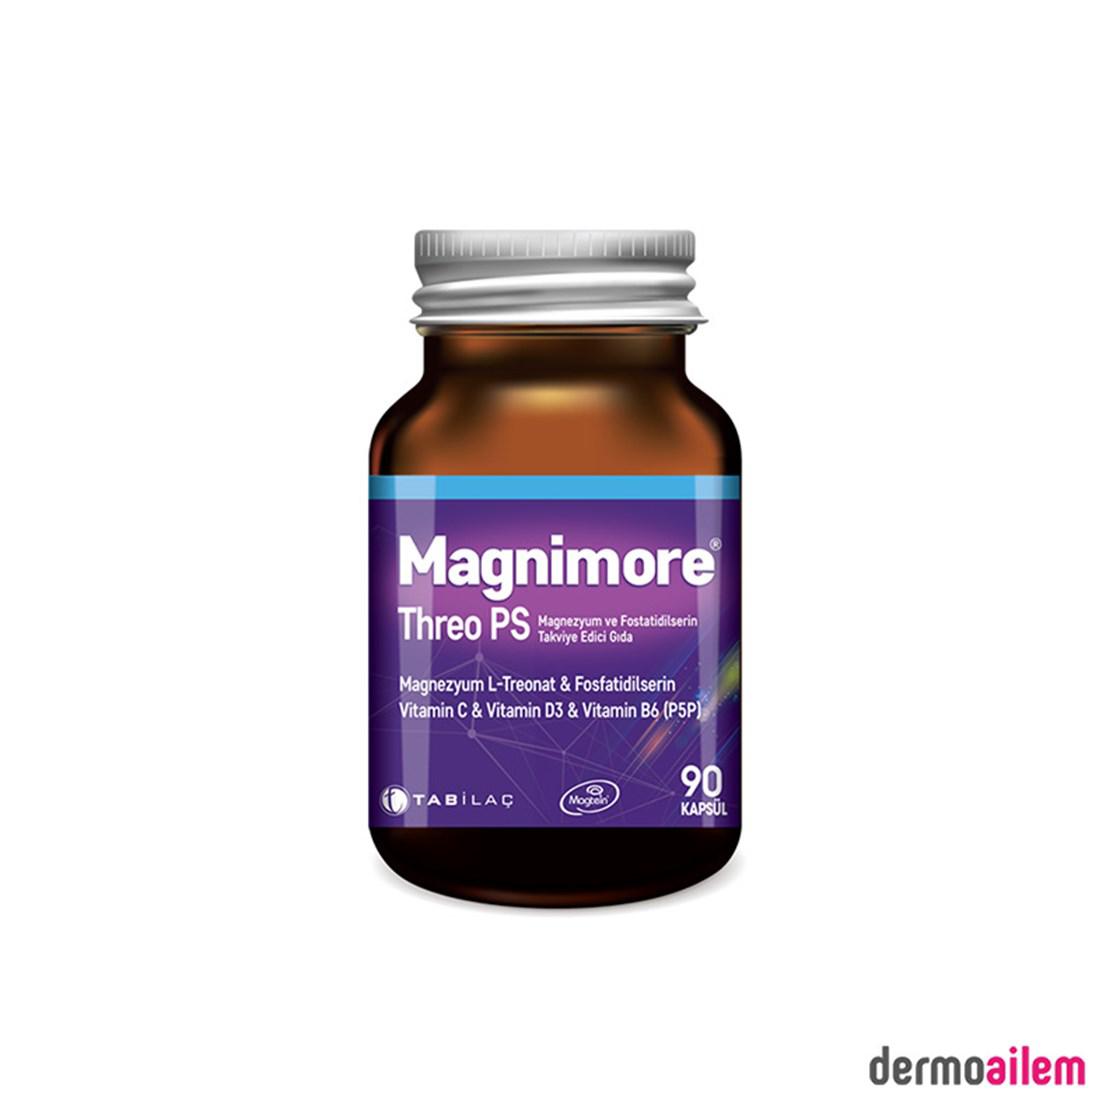 Magnimore Magnezyum Sade Unisex Vitamin 90 Kapsül